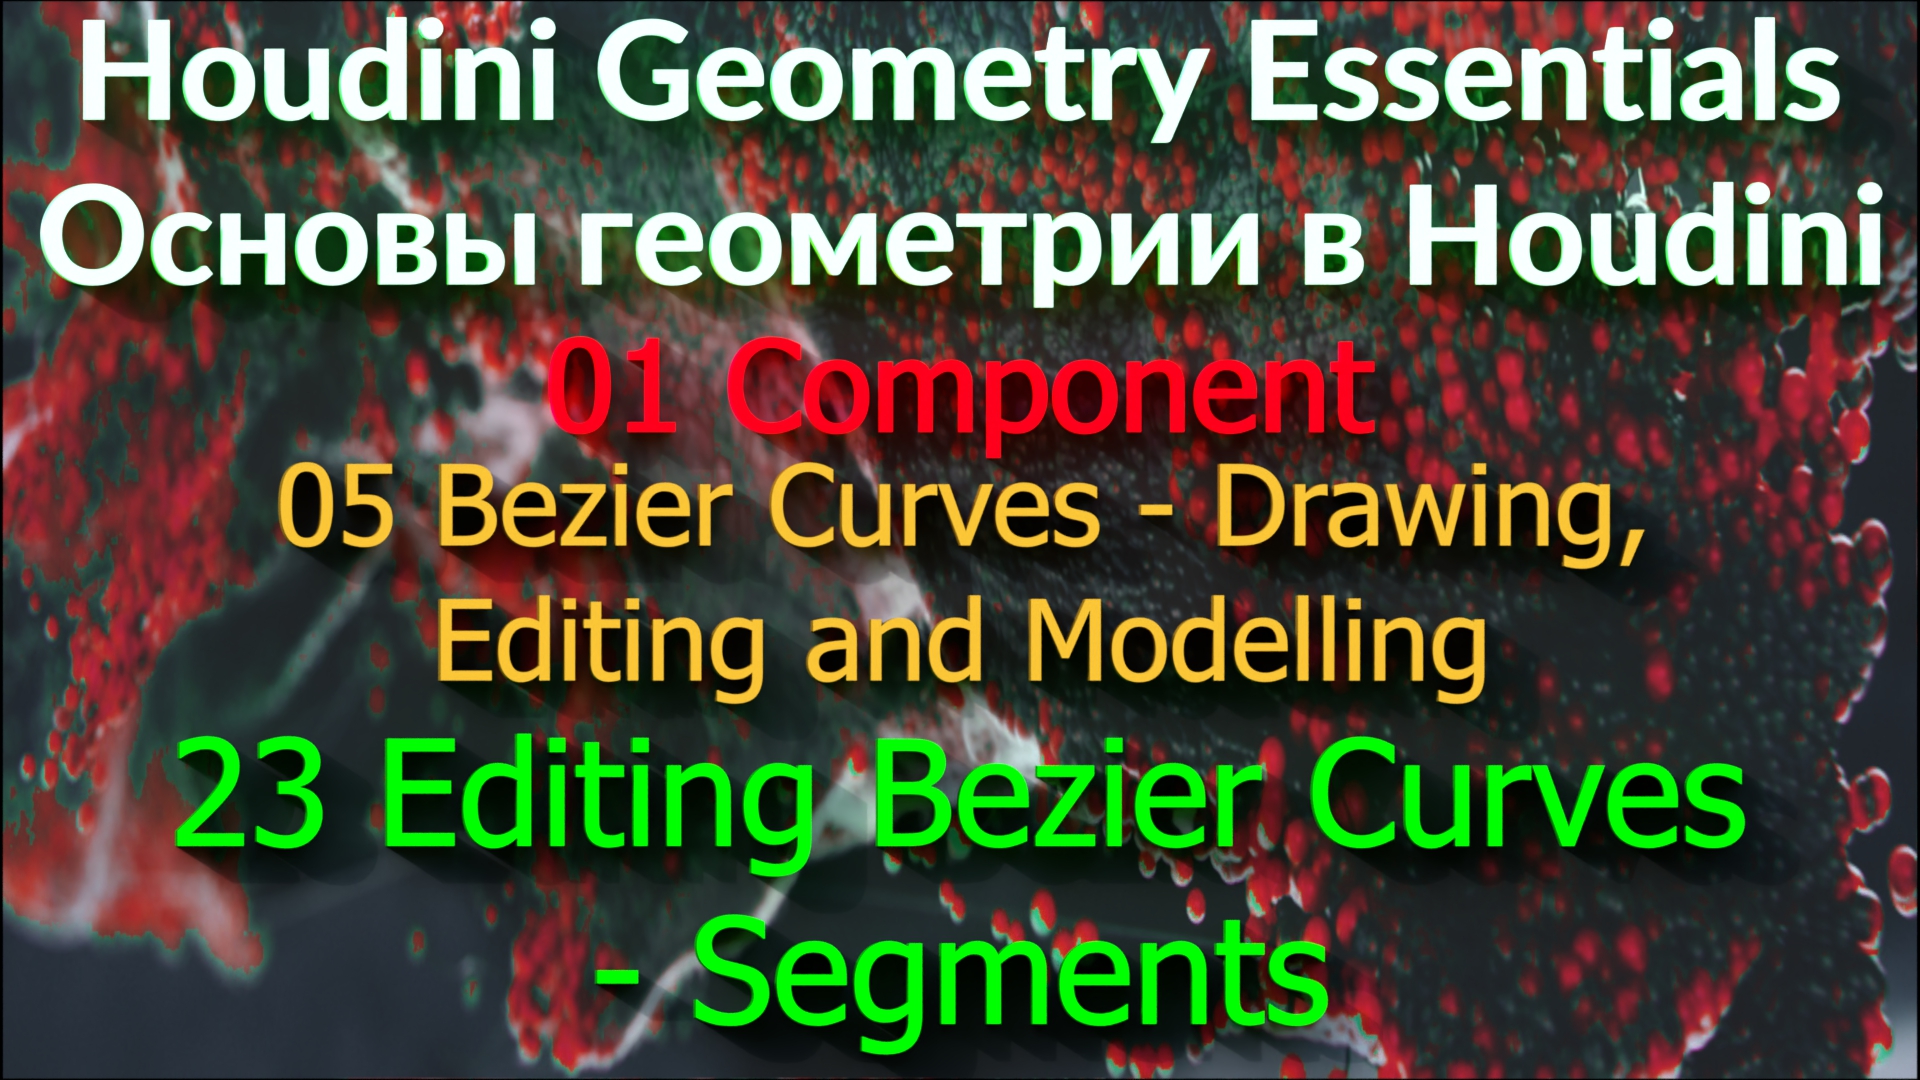 01_05_23. Editing Bezier Curves - Segments